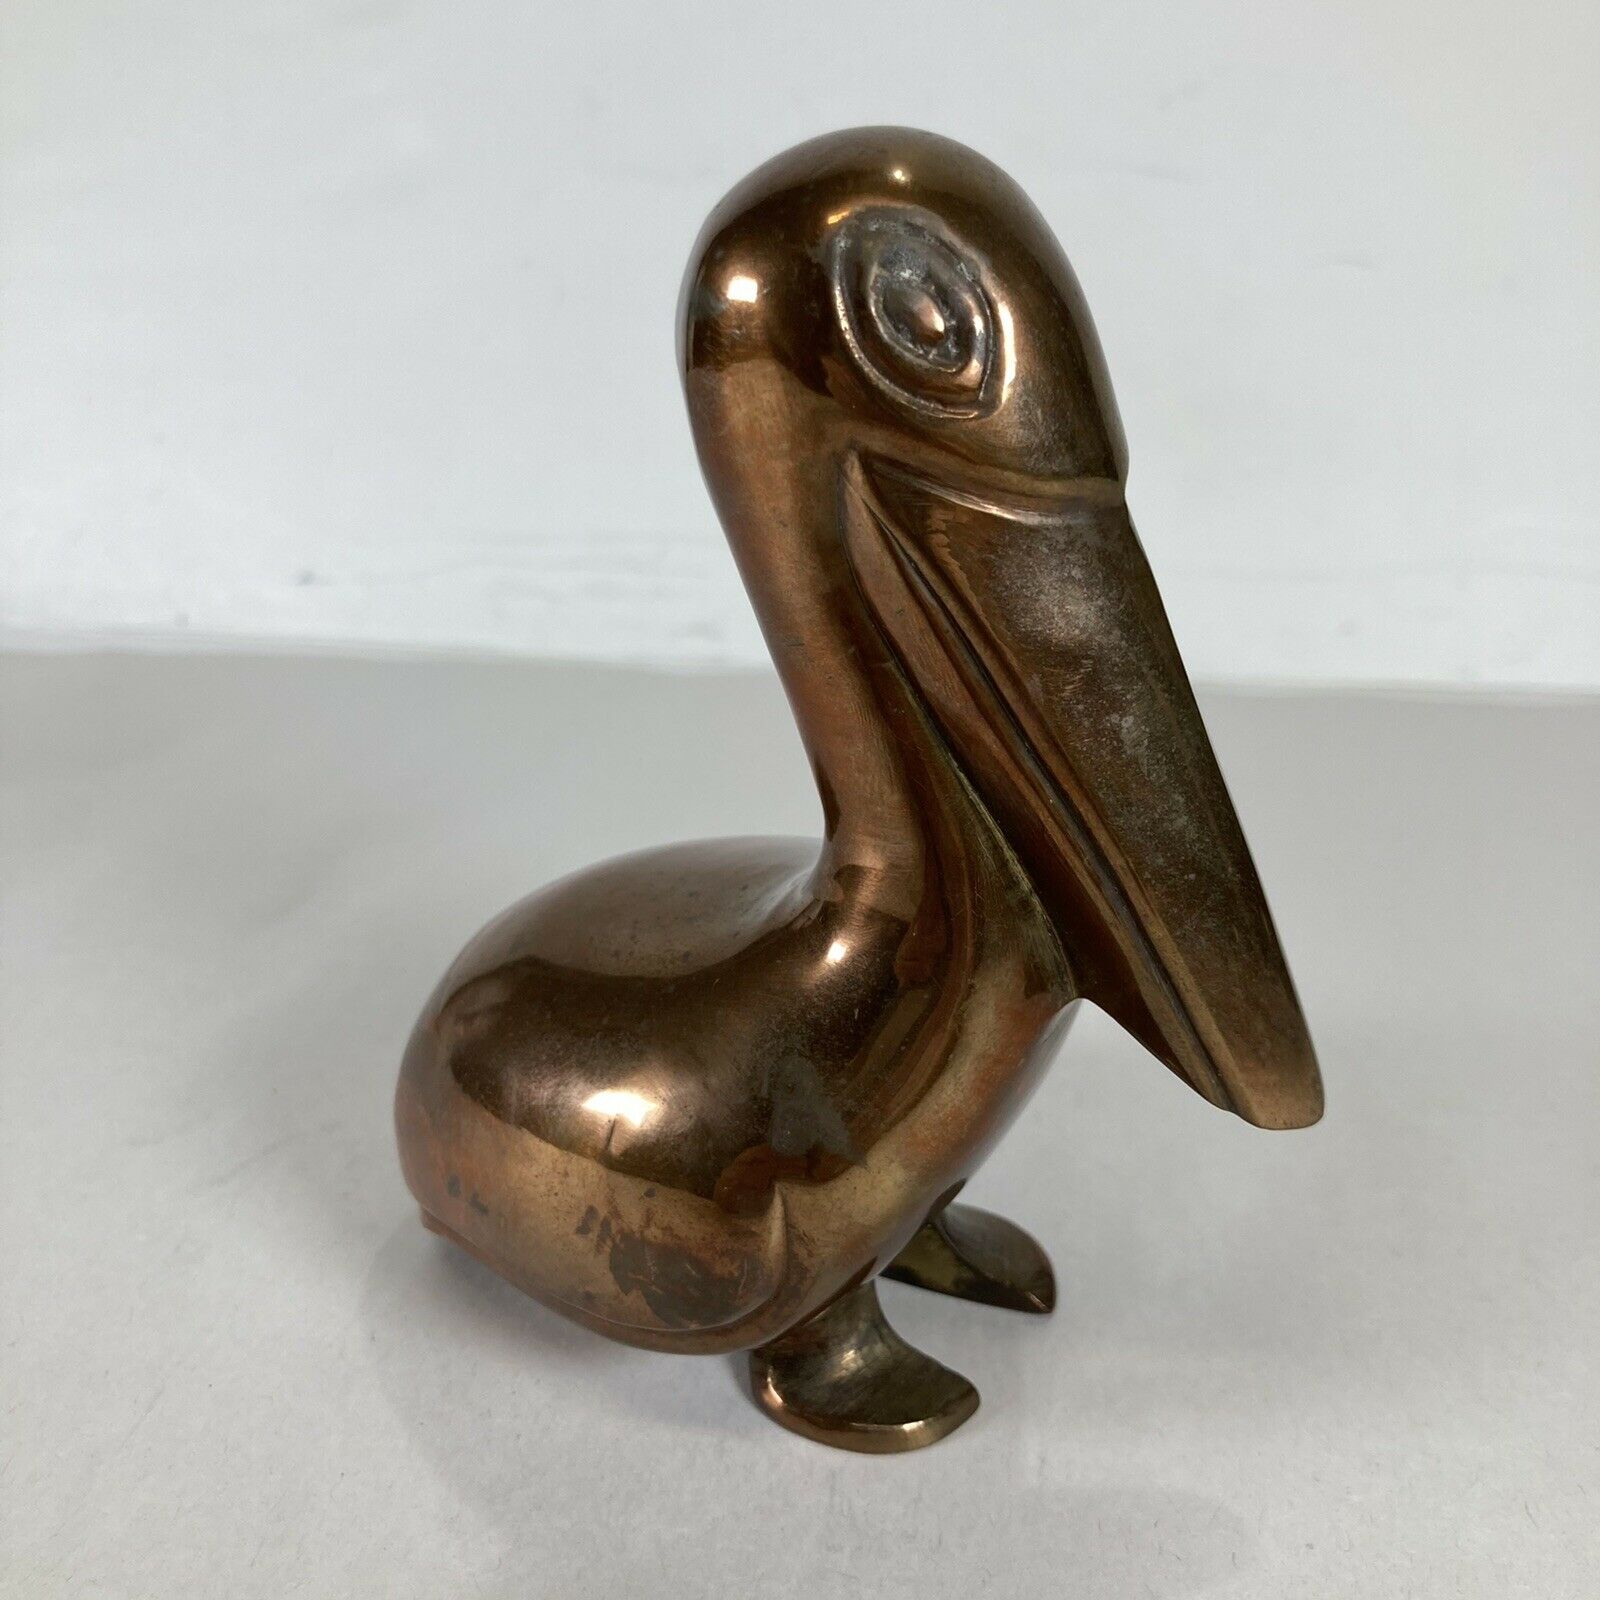 Vintage Solid Brass Pelican Bird Figurine Paper Weight Stands 4.75” Tall